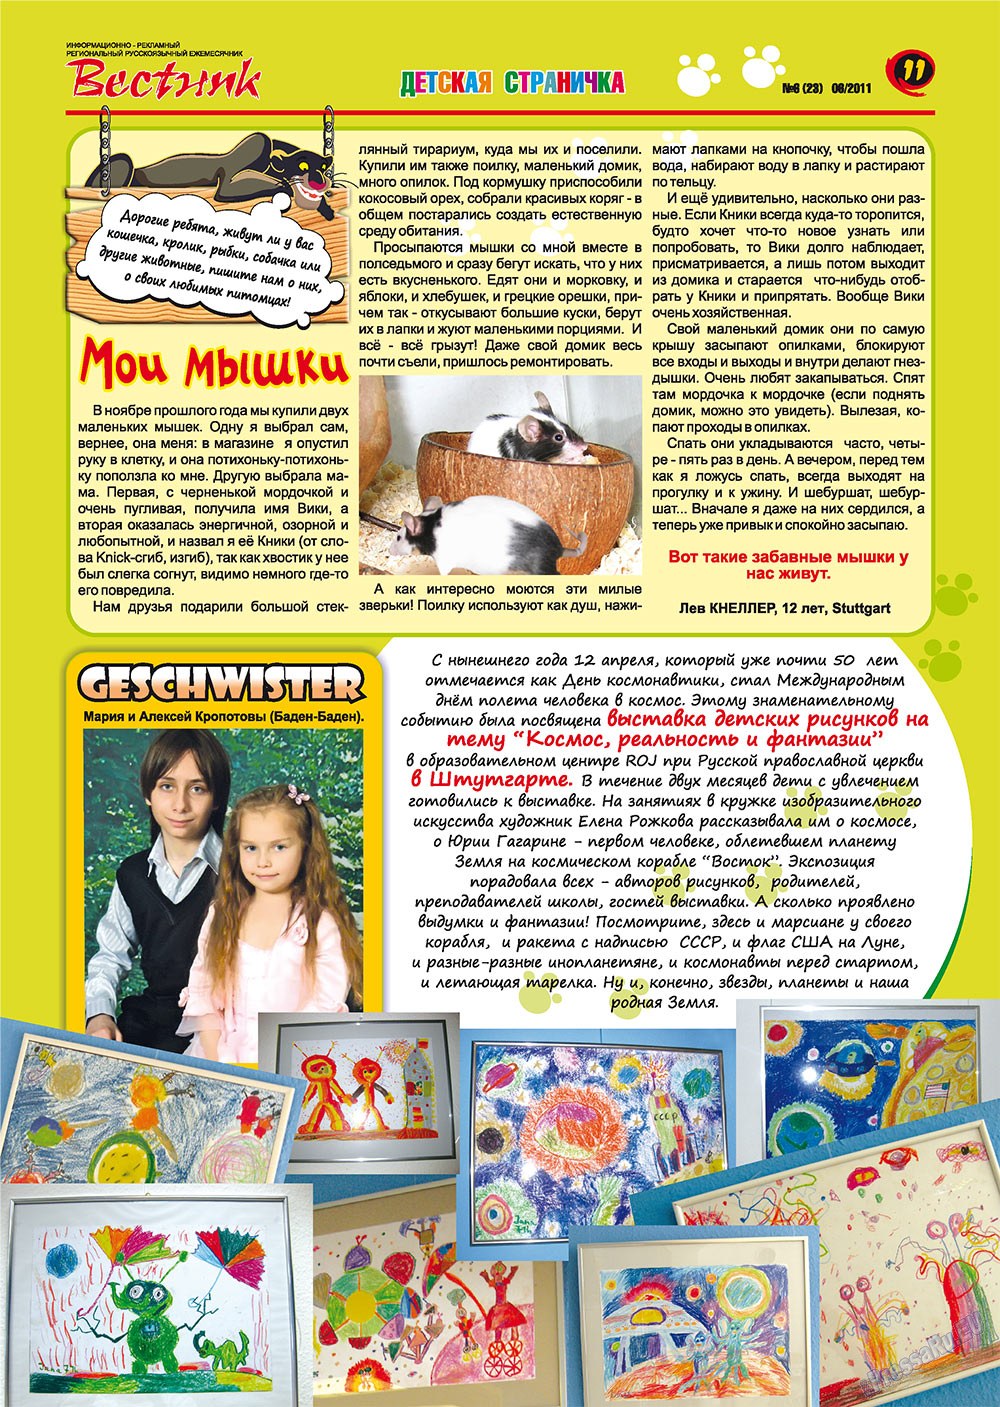 Вестник-info (журнал). 2011 год, номер 6, стр. 11